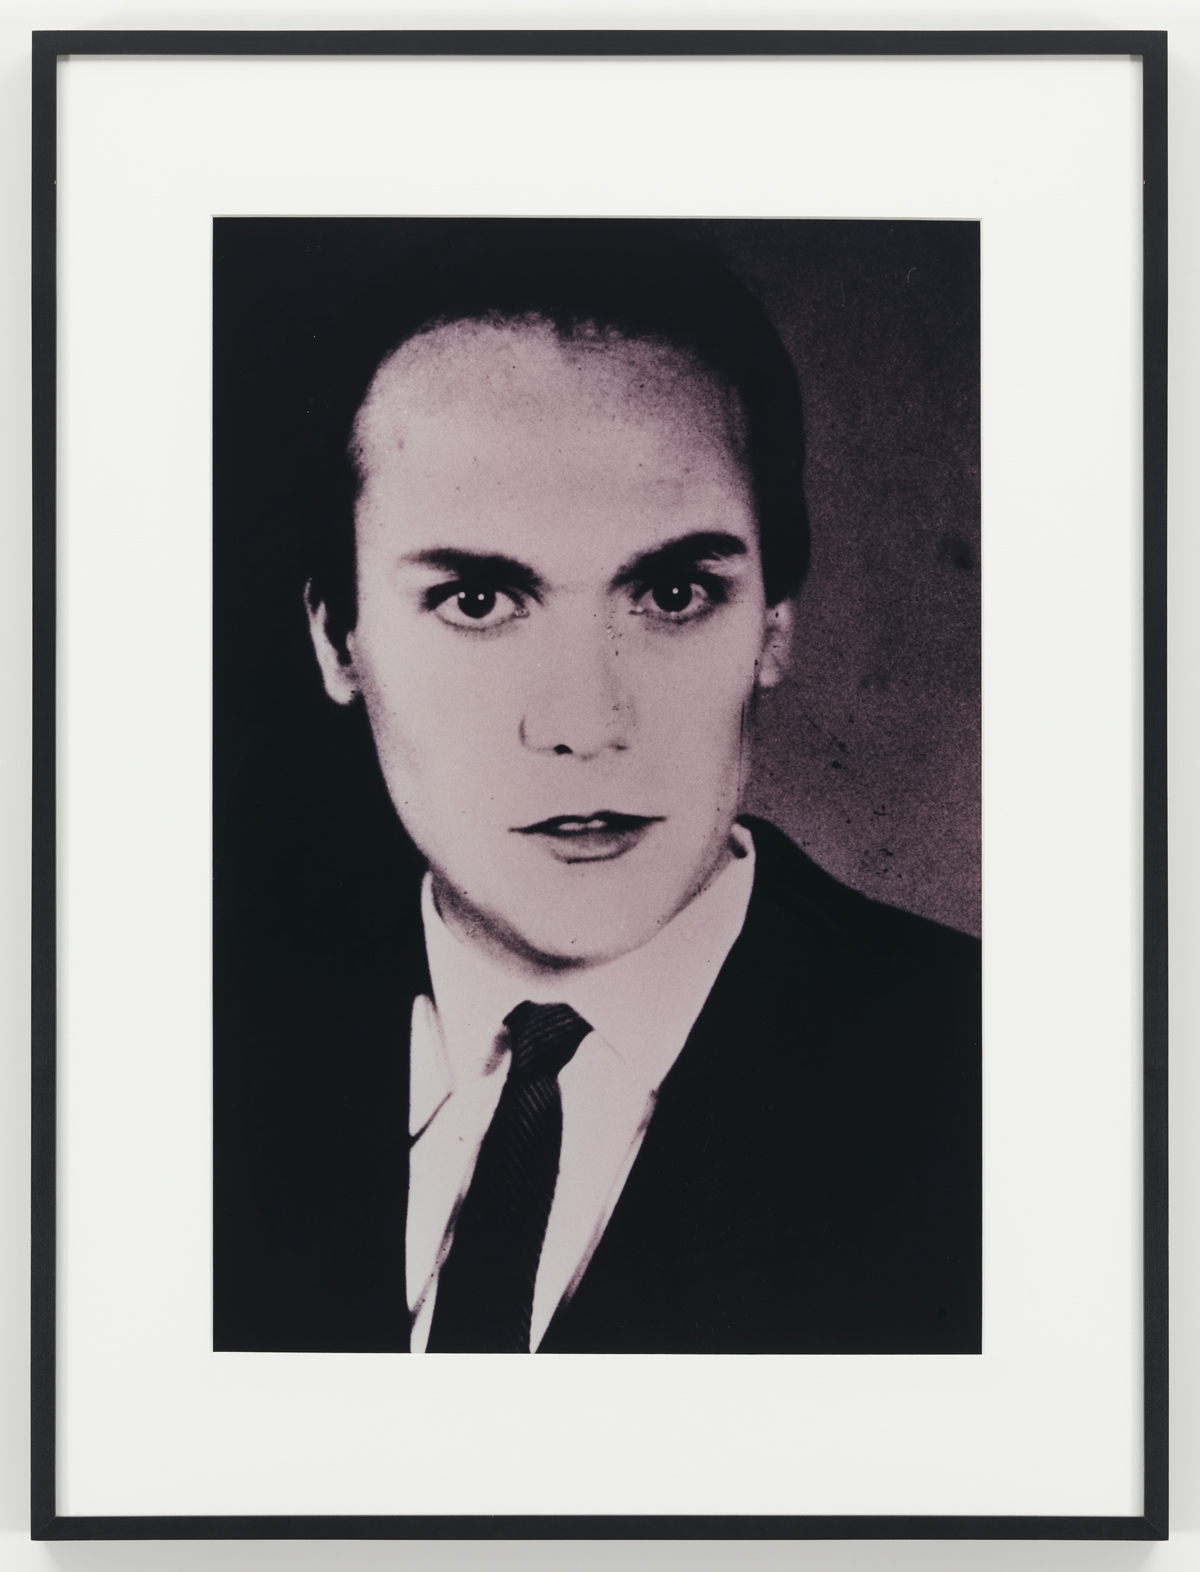 Untitled (Self-Portrait), 1980